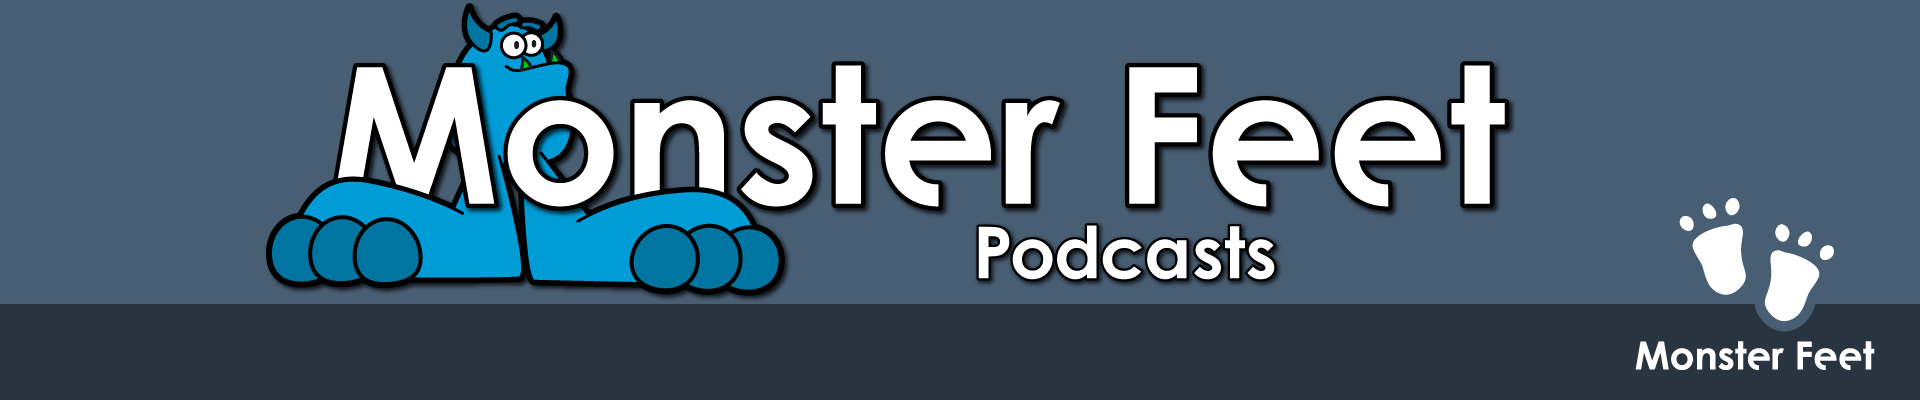 Monster Feet podcasts